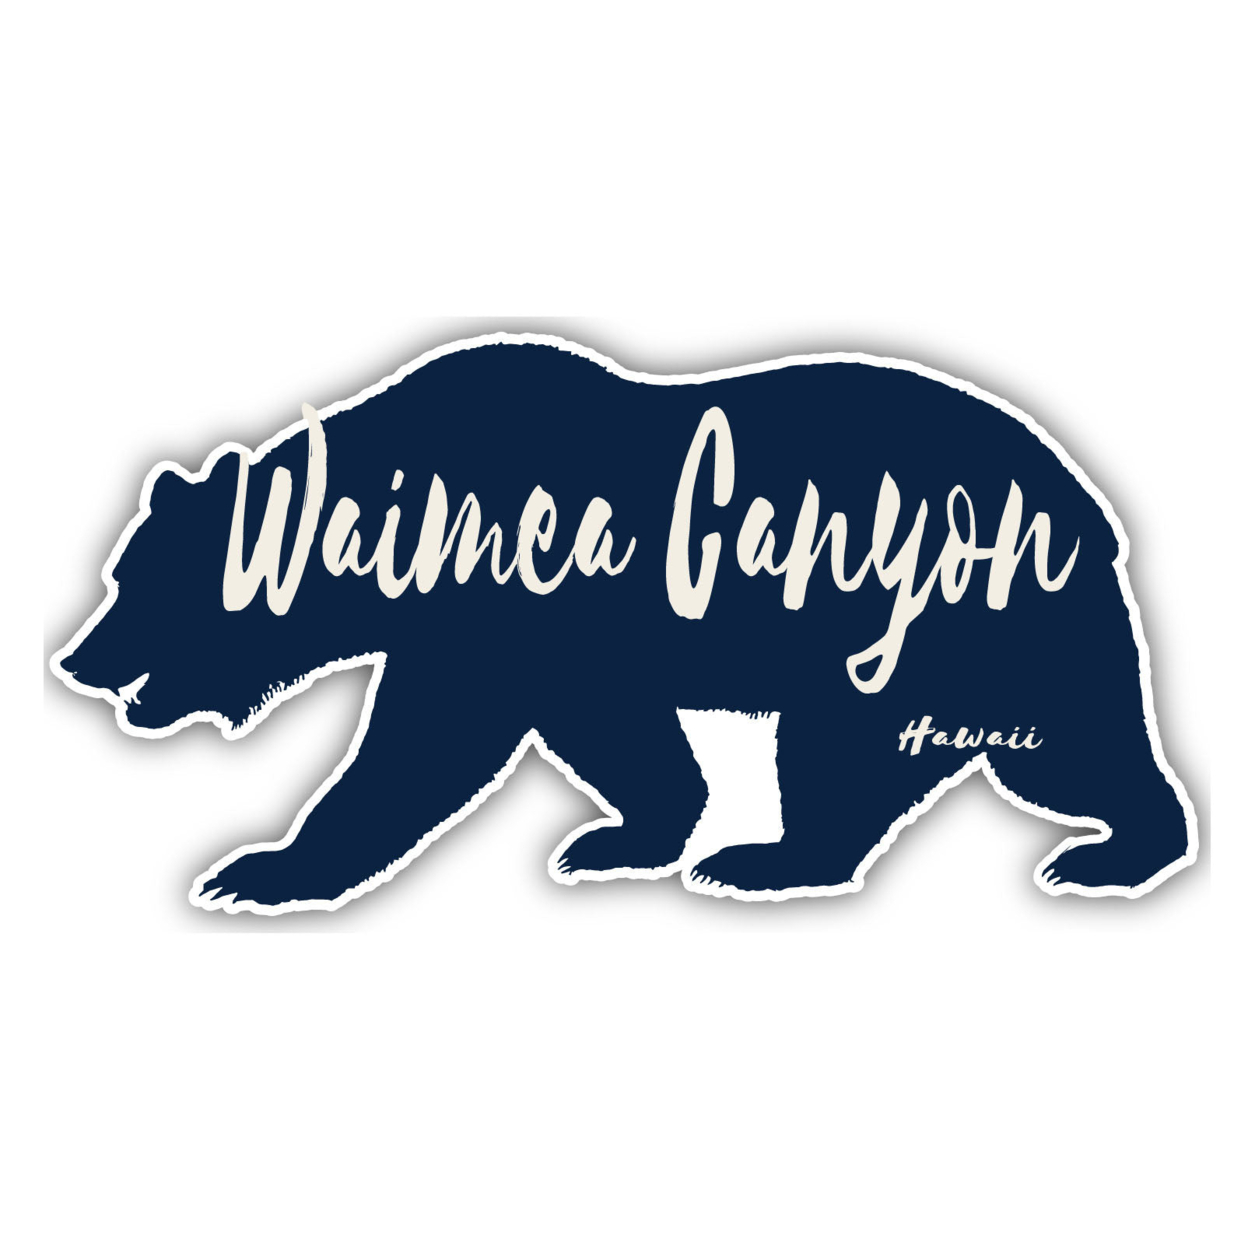 Waimea Canyon Hawaii Souvenir Decorative Stickers (Choose Theme And Size) - Single Unit, 2-Inch, Bear